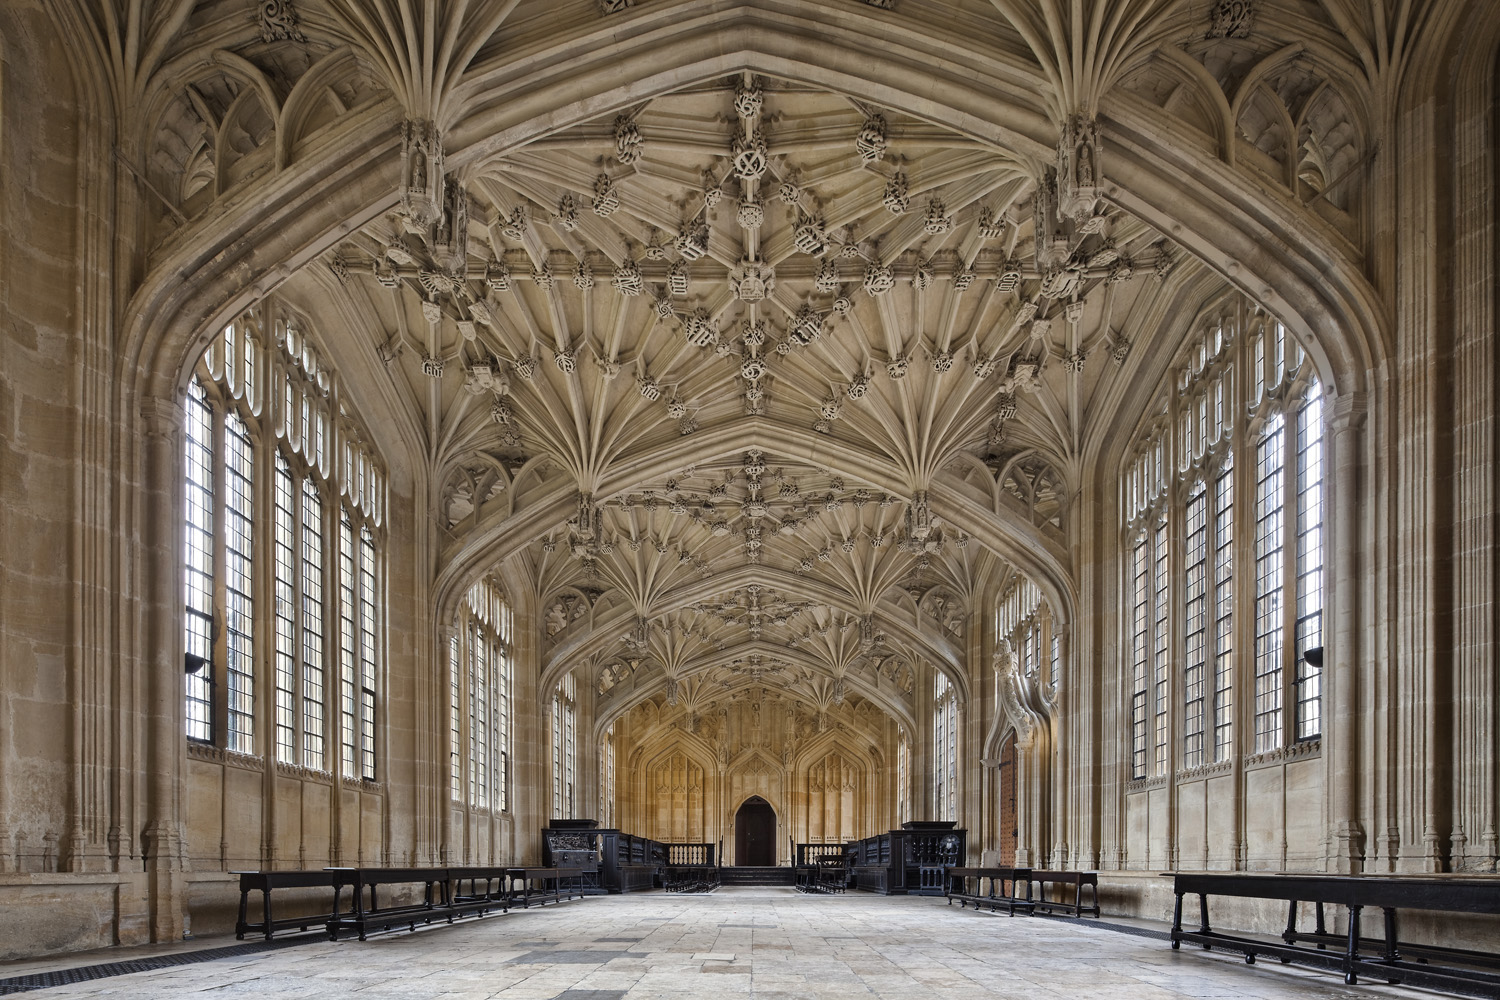  Divinity School, Bodleian Libraries, Oxford, UK 